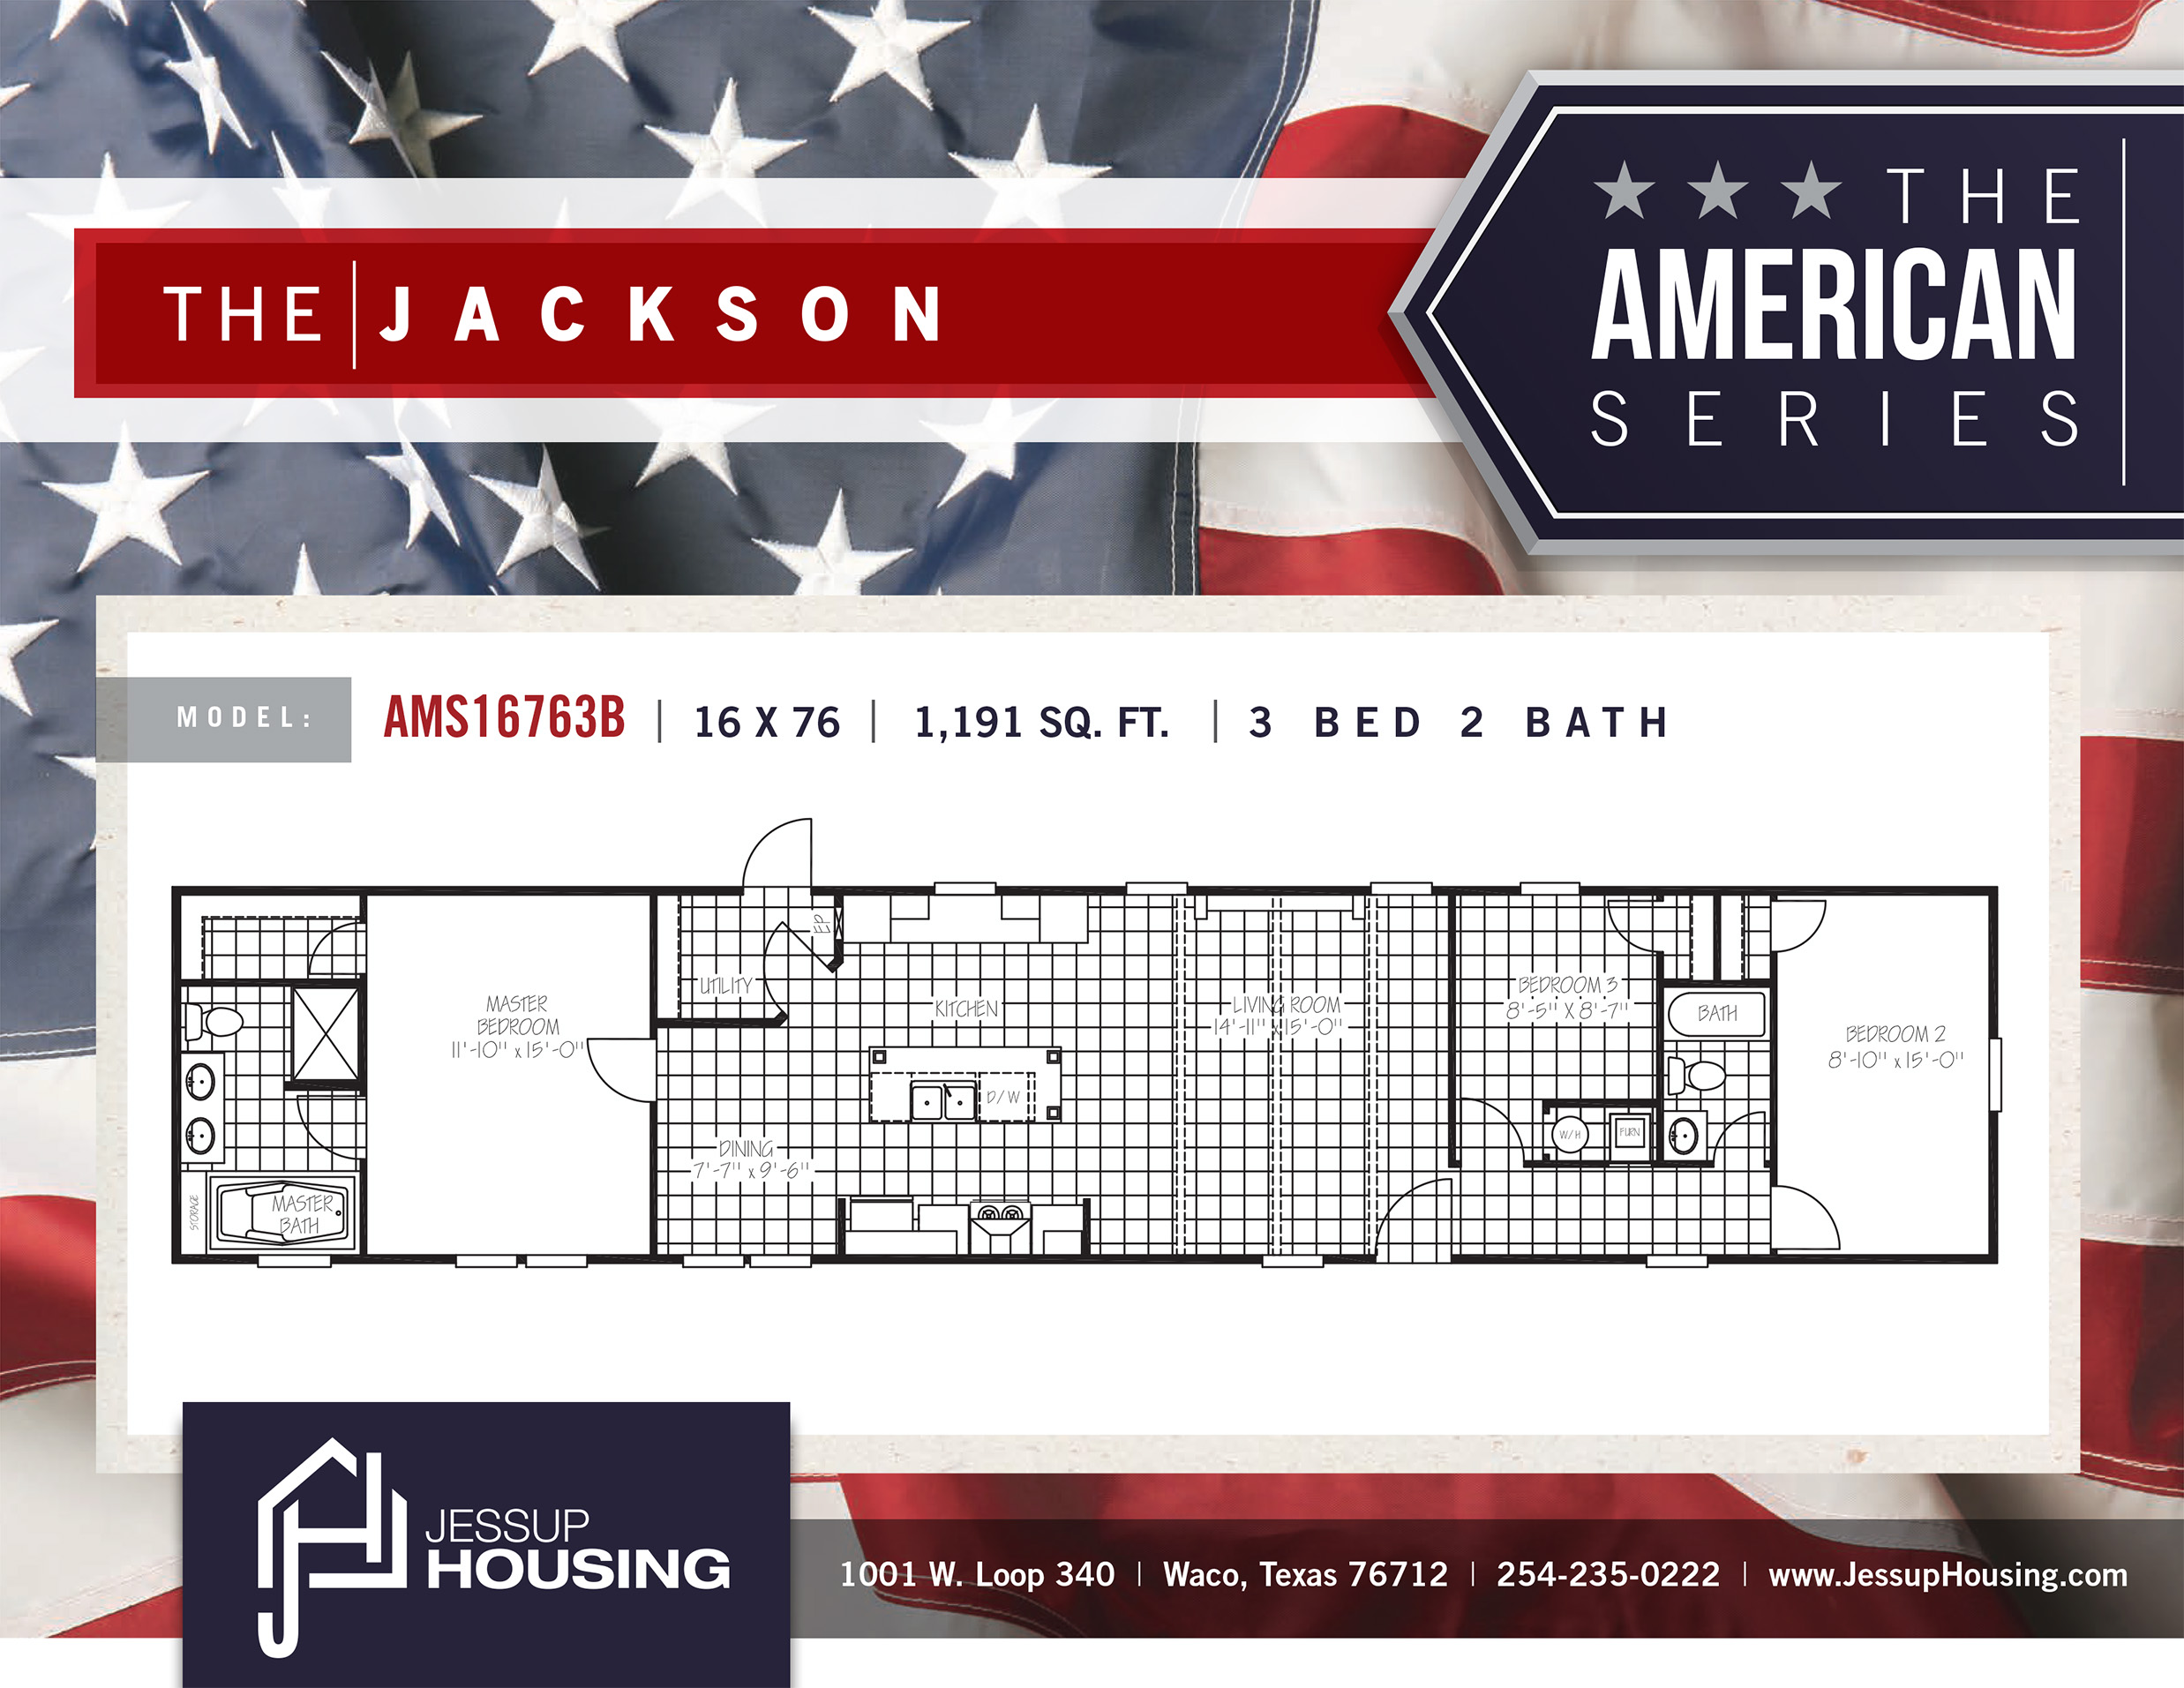 The Jackson Floorplan